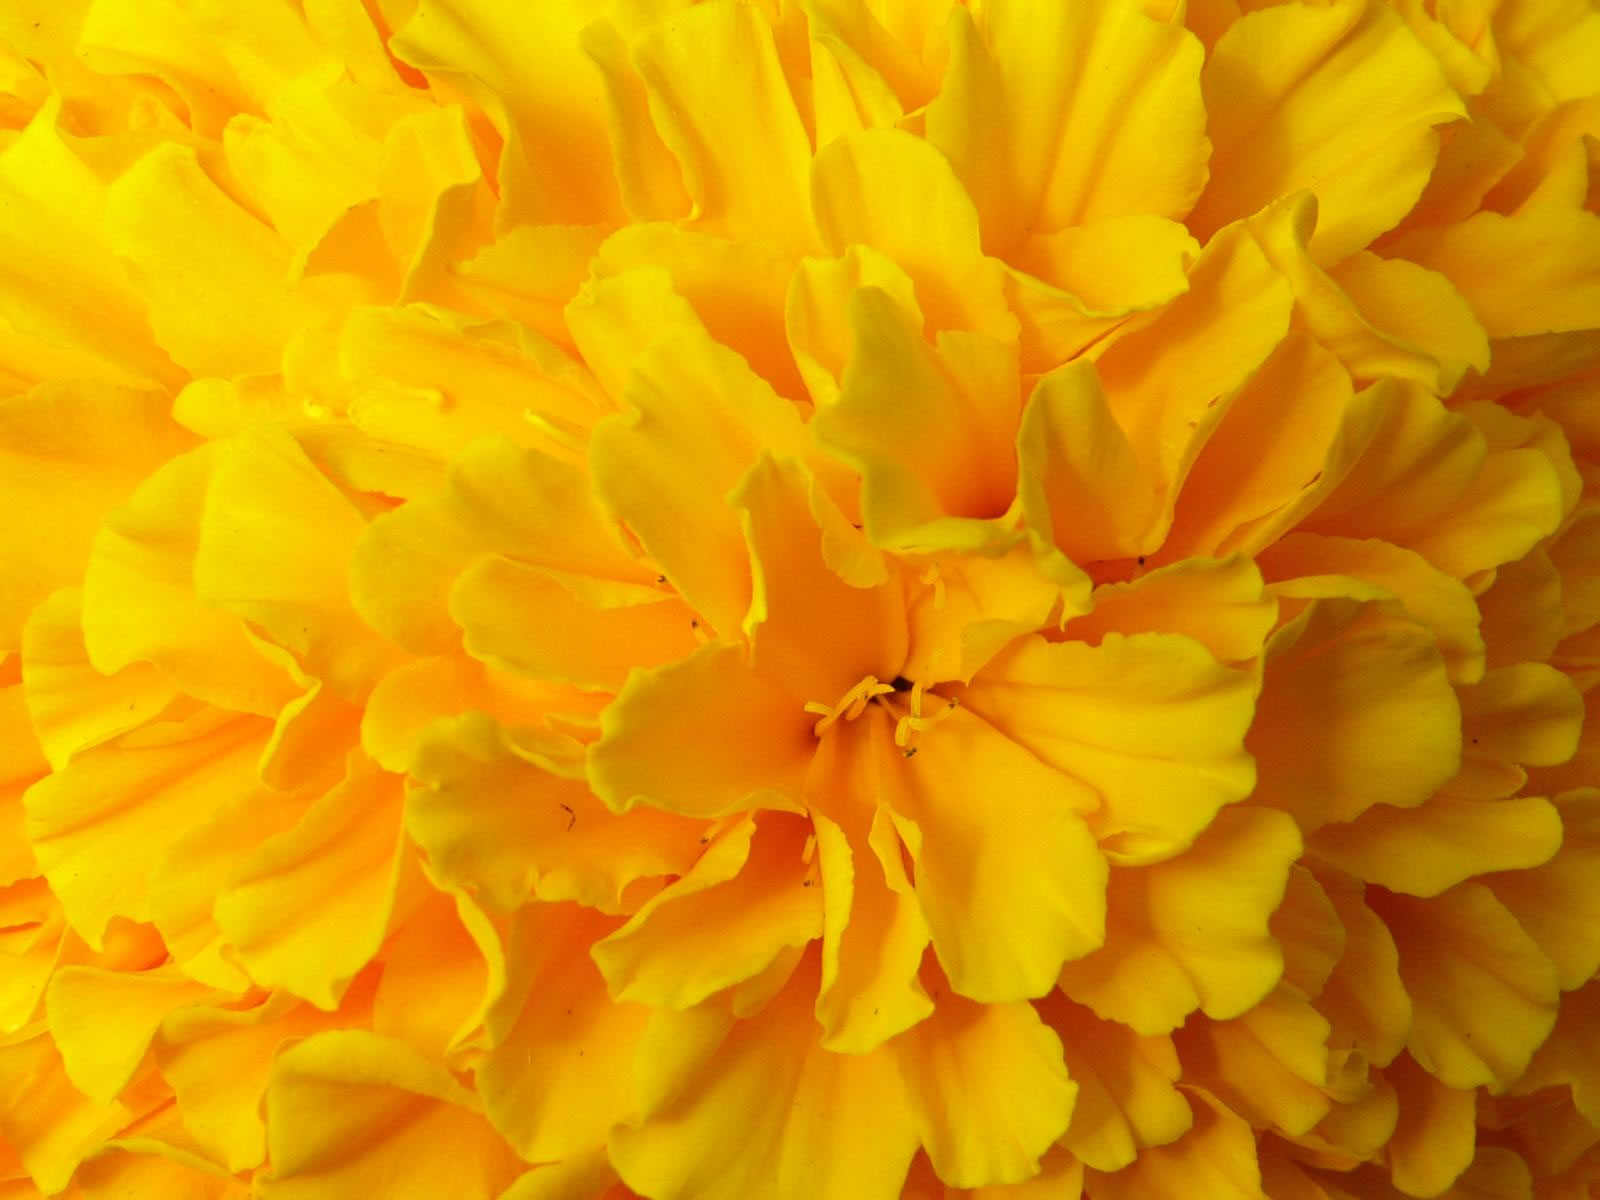 Yellow Floral Wallpaper Grasscloth